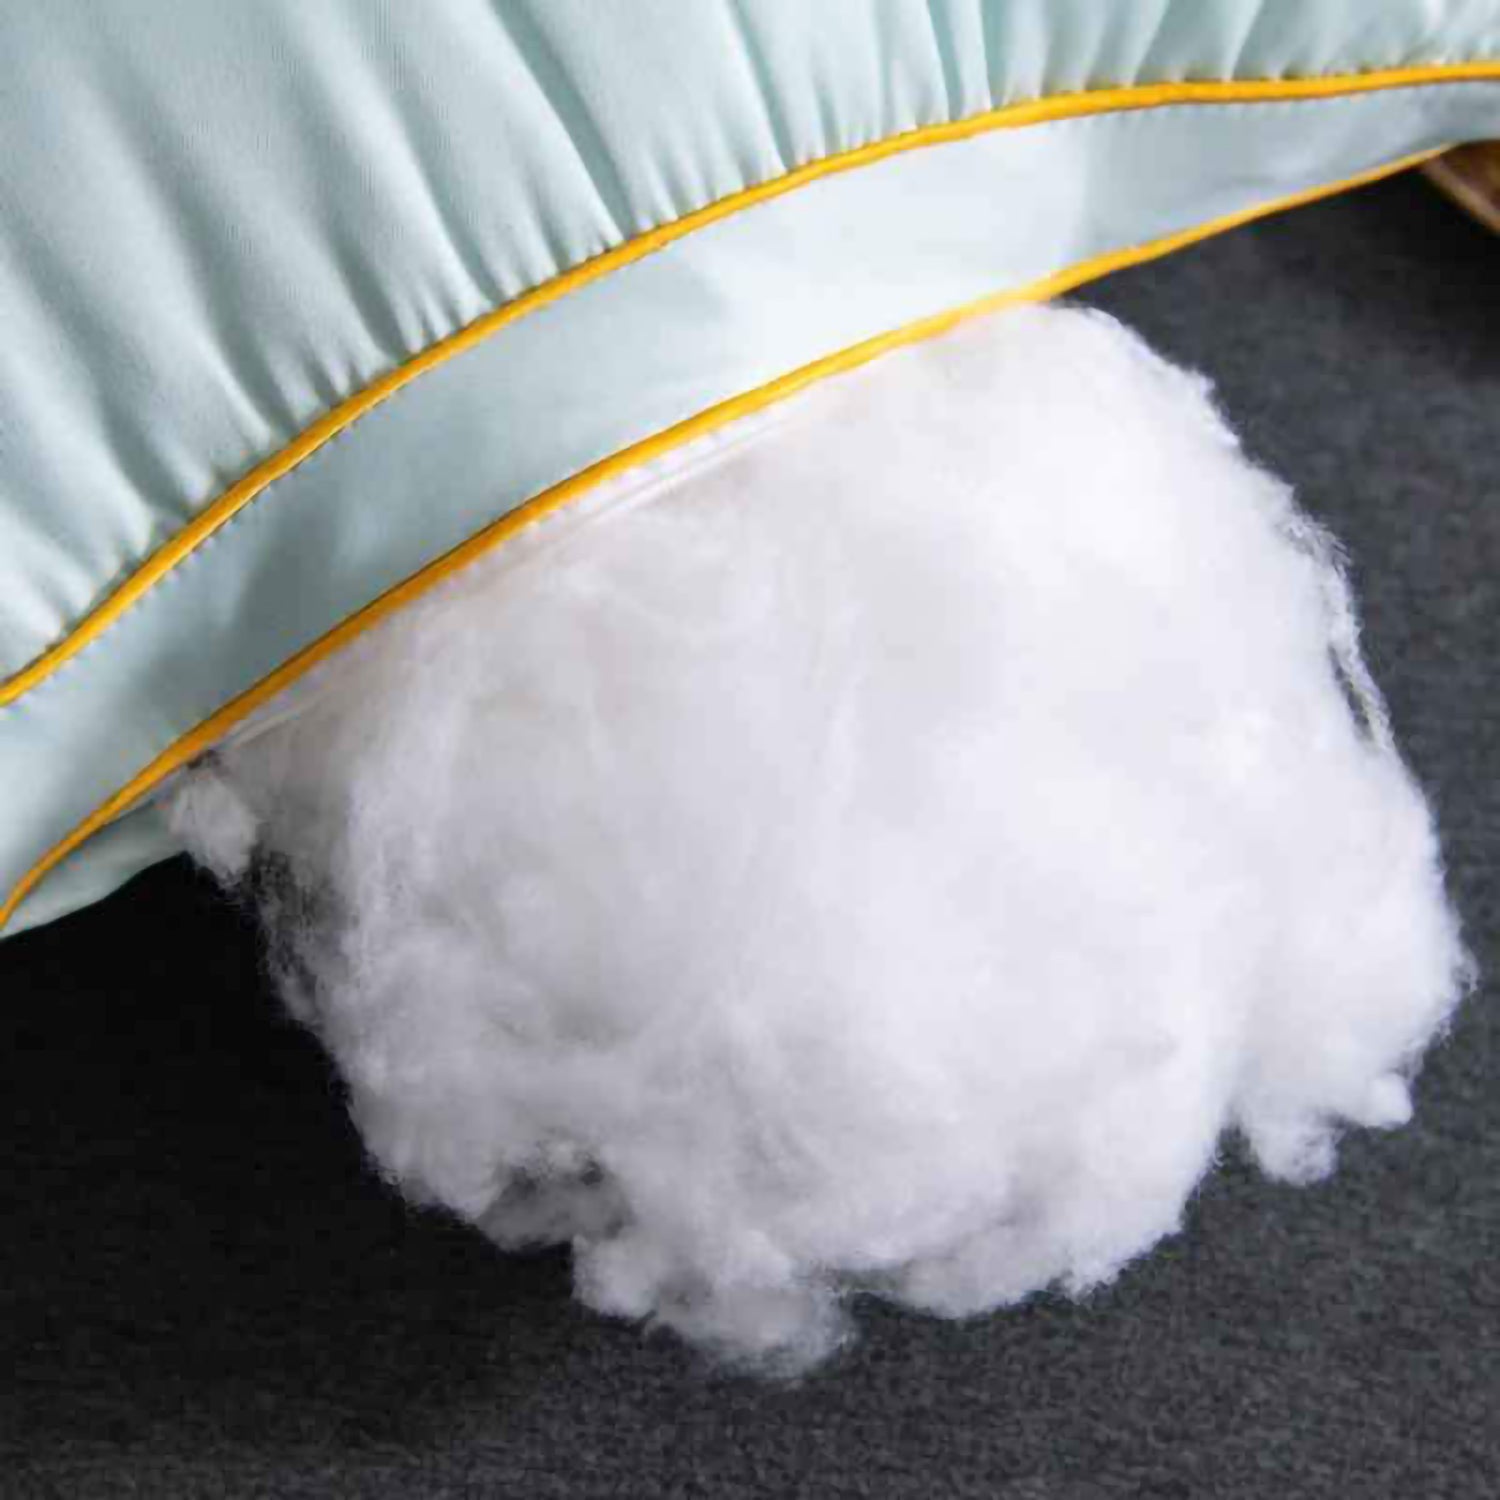 HILTON High Quality Cotton Pillow 1000G / 650G 48cm x 74cm